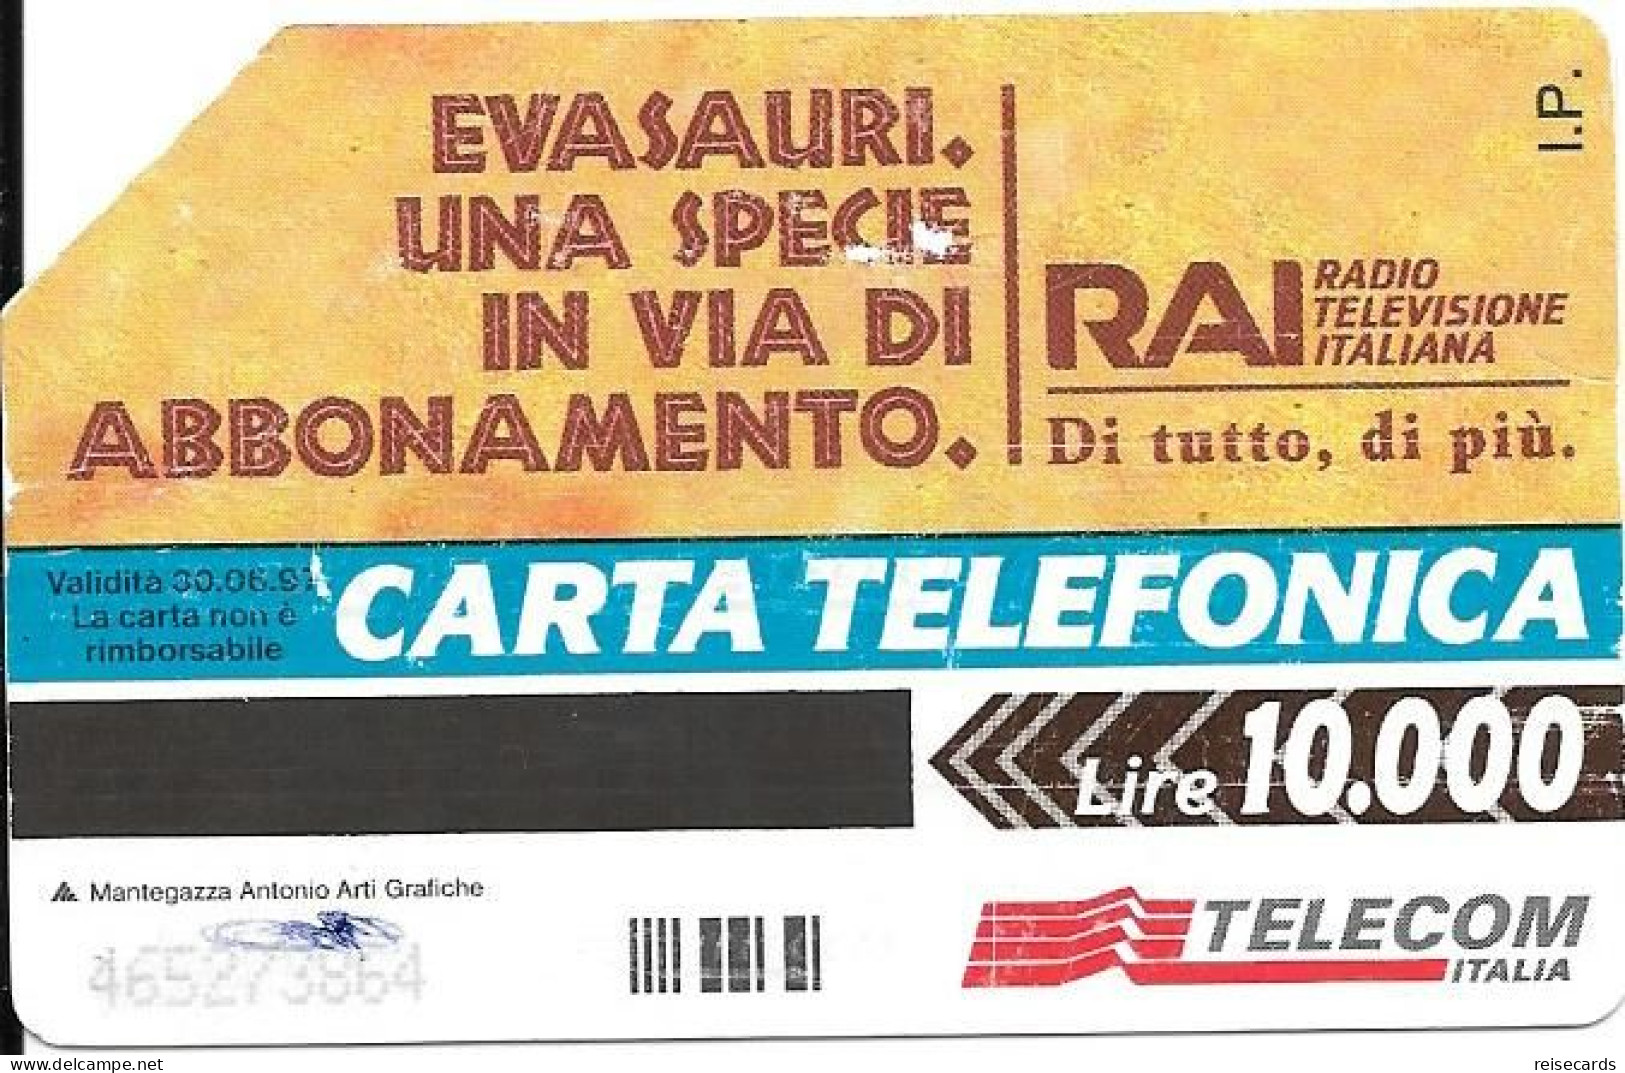 Italy: Telecom Italia - RAI Radio Televisione Italiana - Openbare Reclame